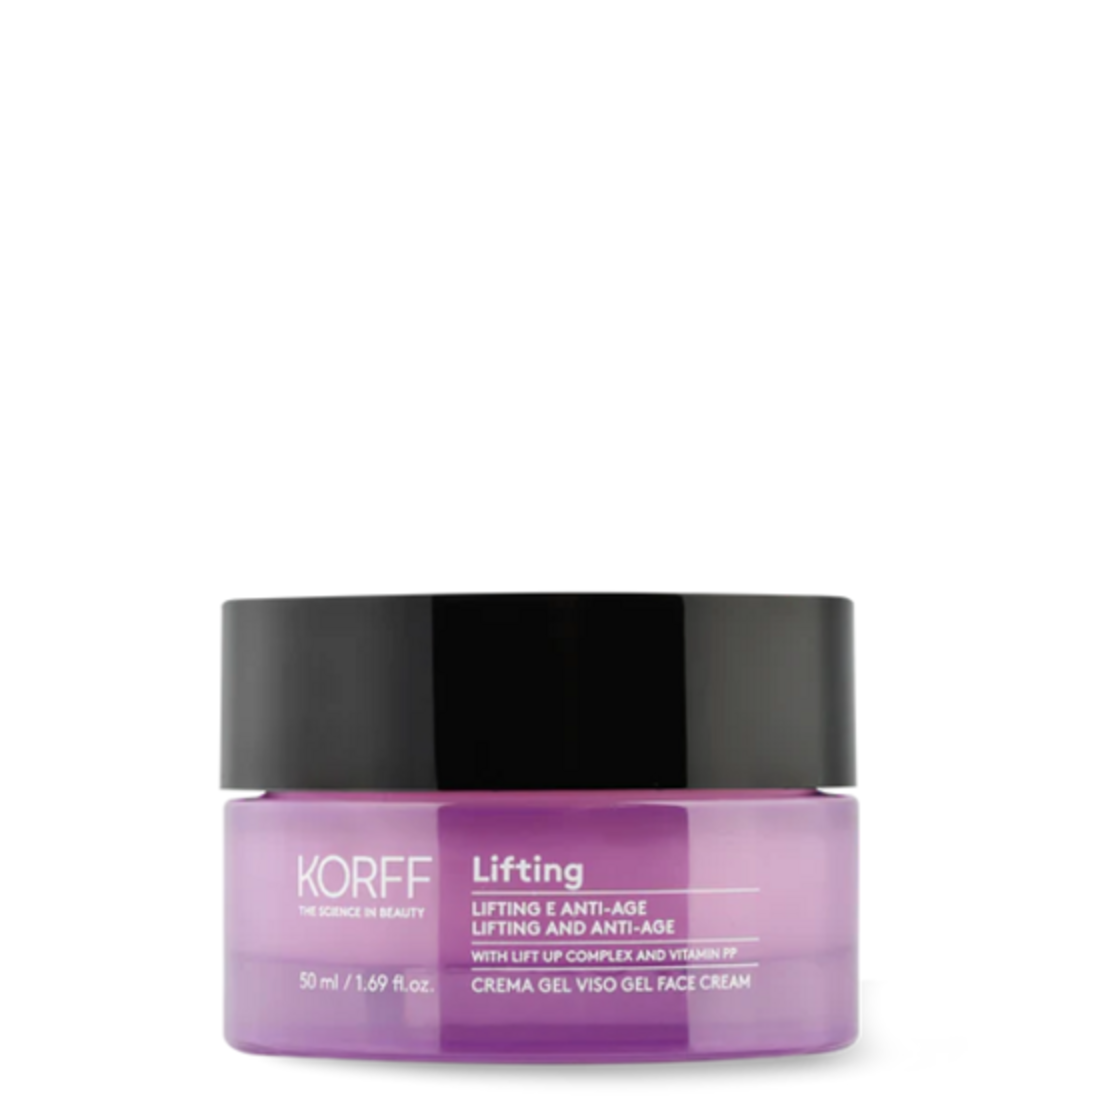 korff-lifting 40-76 gel face cream